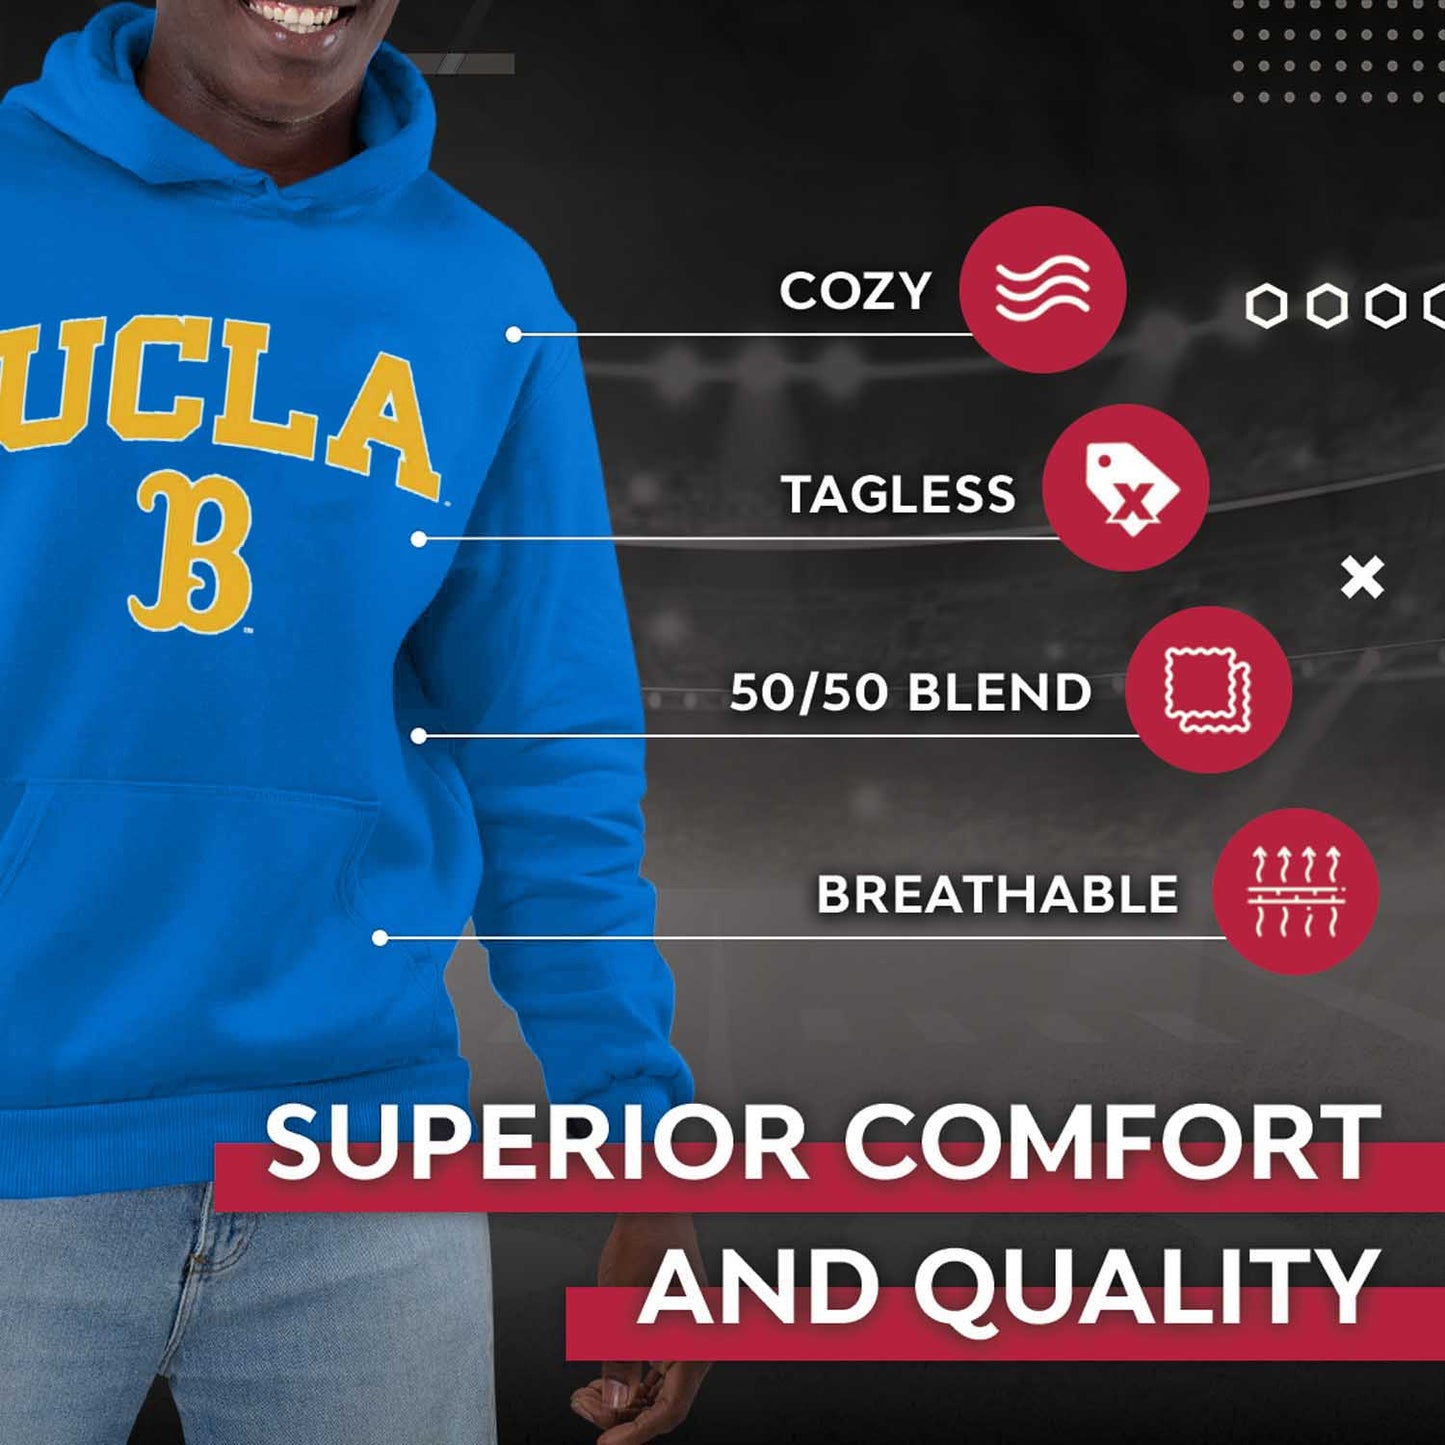 UCLA Bruins Adult Arch & Logo Soft Style Gameday Hooded Sweatshirt - Light Blue